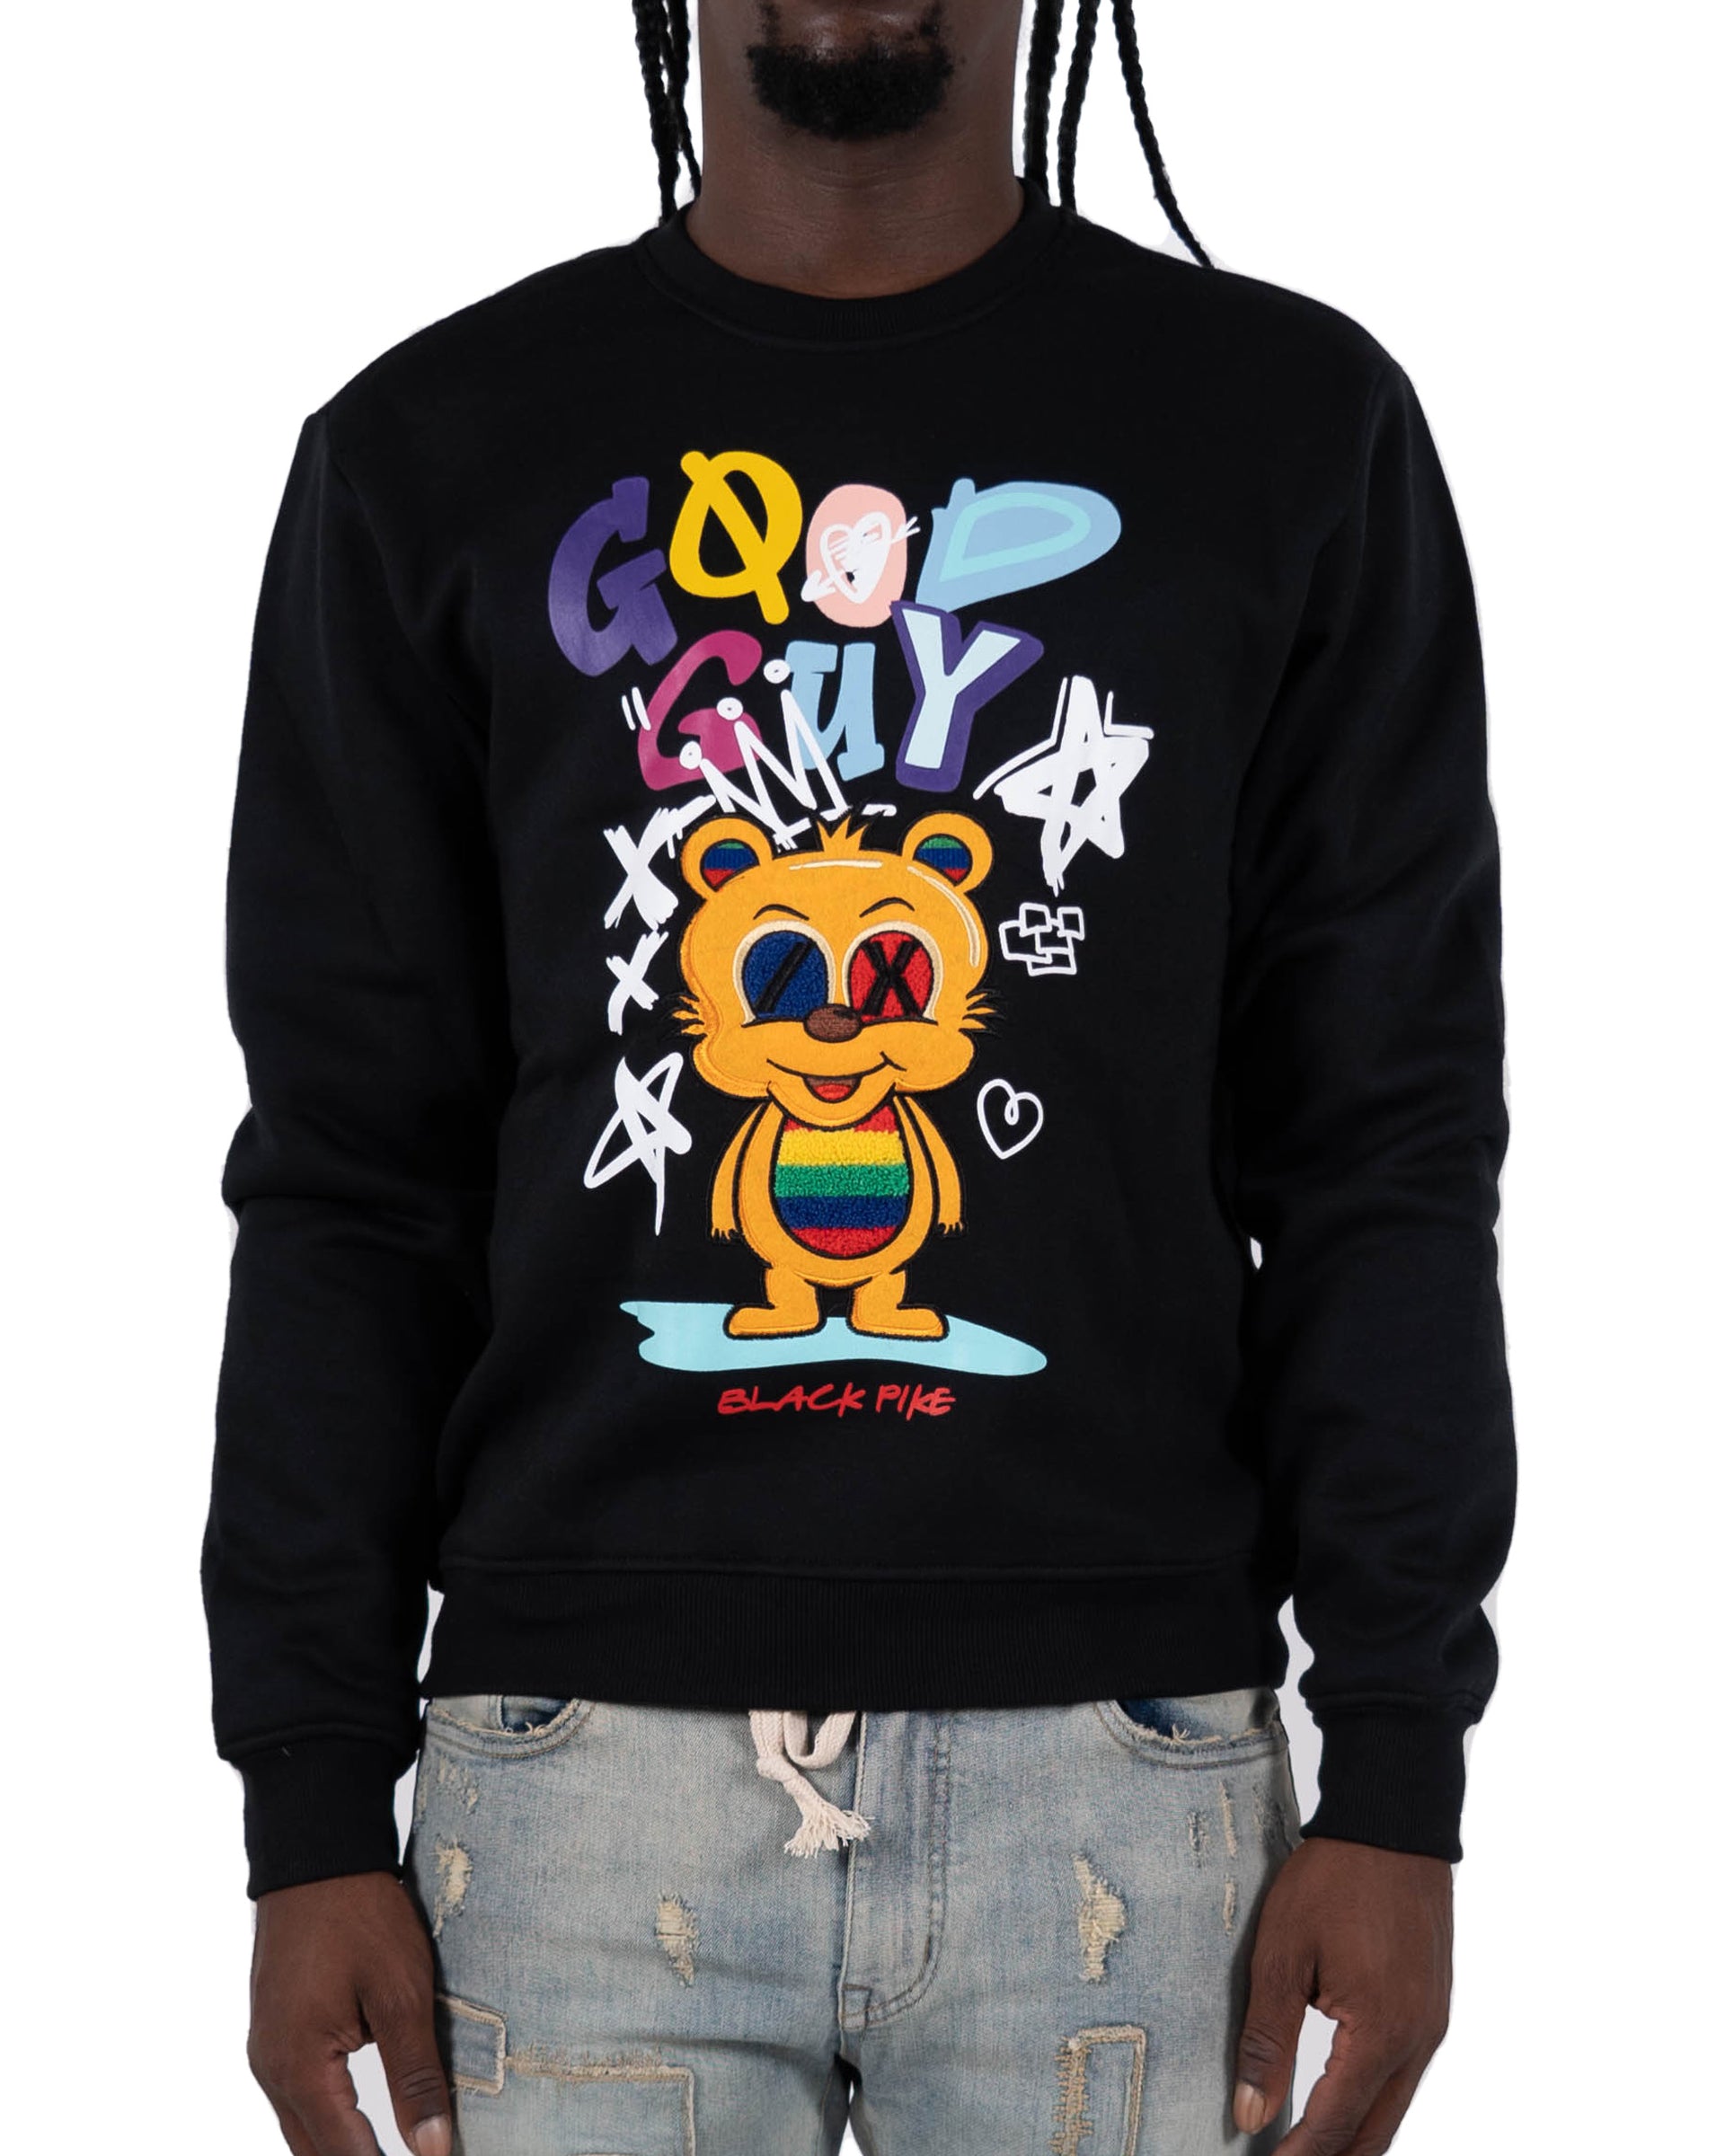 Men's "Good Guy" Graphic Embroidered Sweatshirt | Black